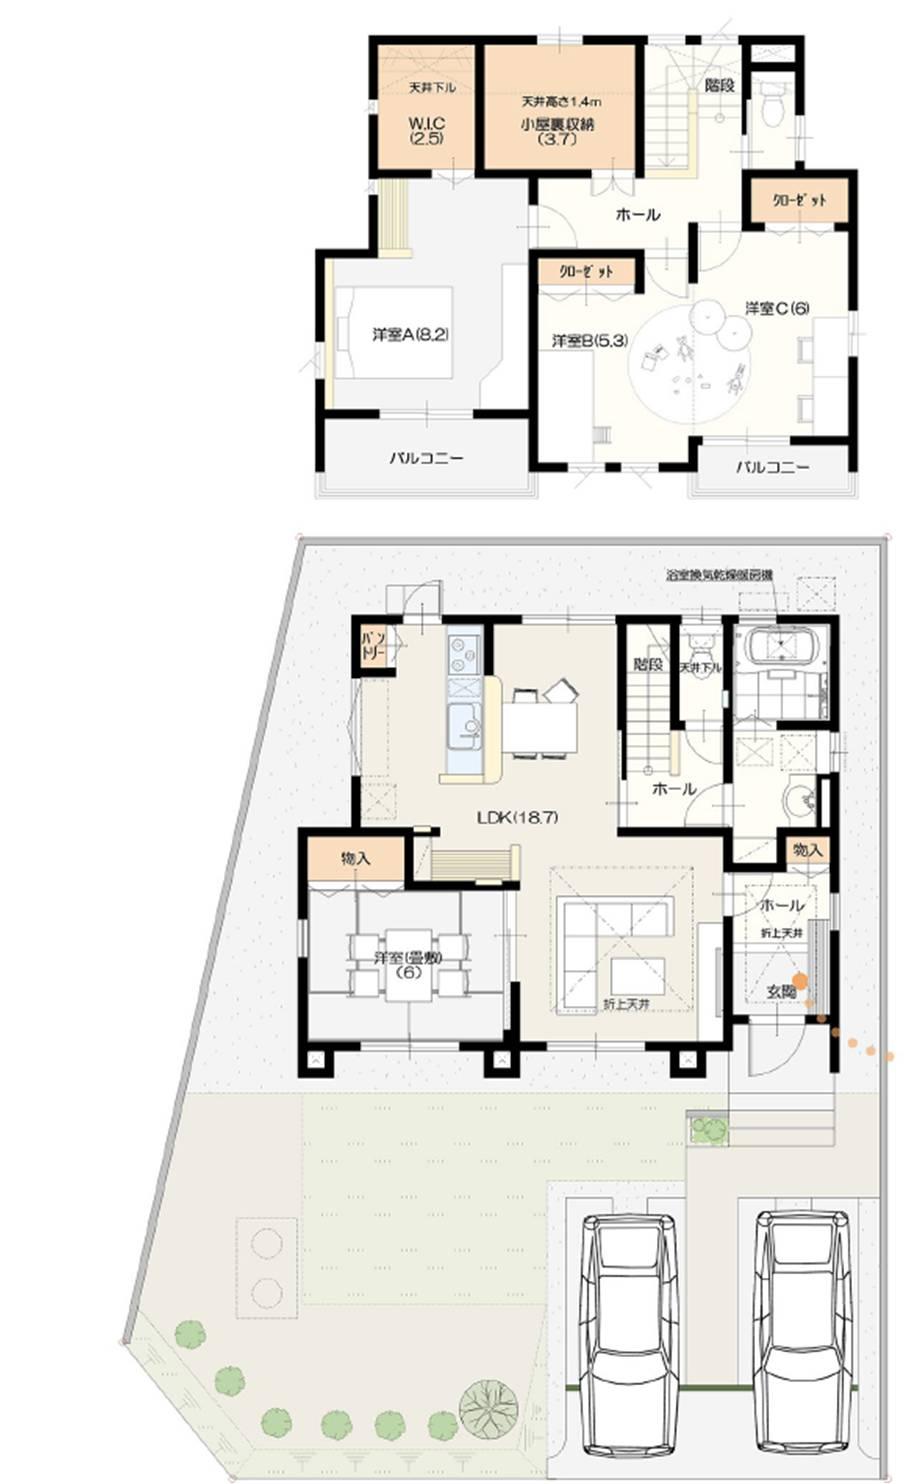 Floor plan. (No. 1 point), Price 28.6 million yen, 3LDK, Land area 187 sq m , Building area 111.78 sq m